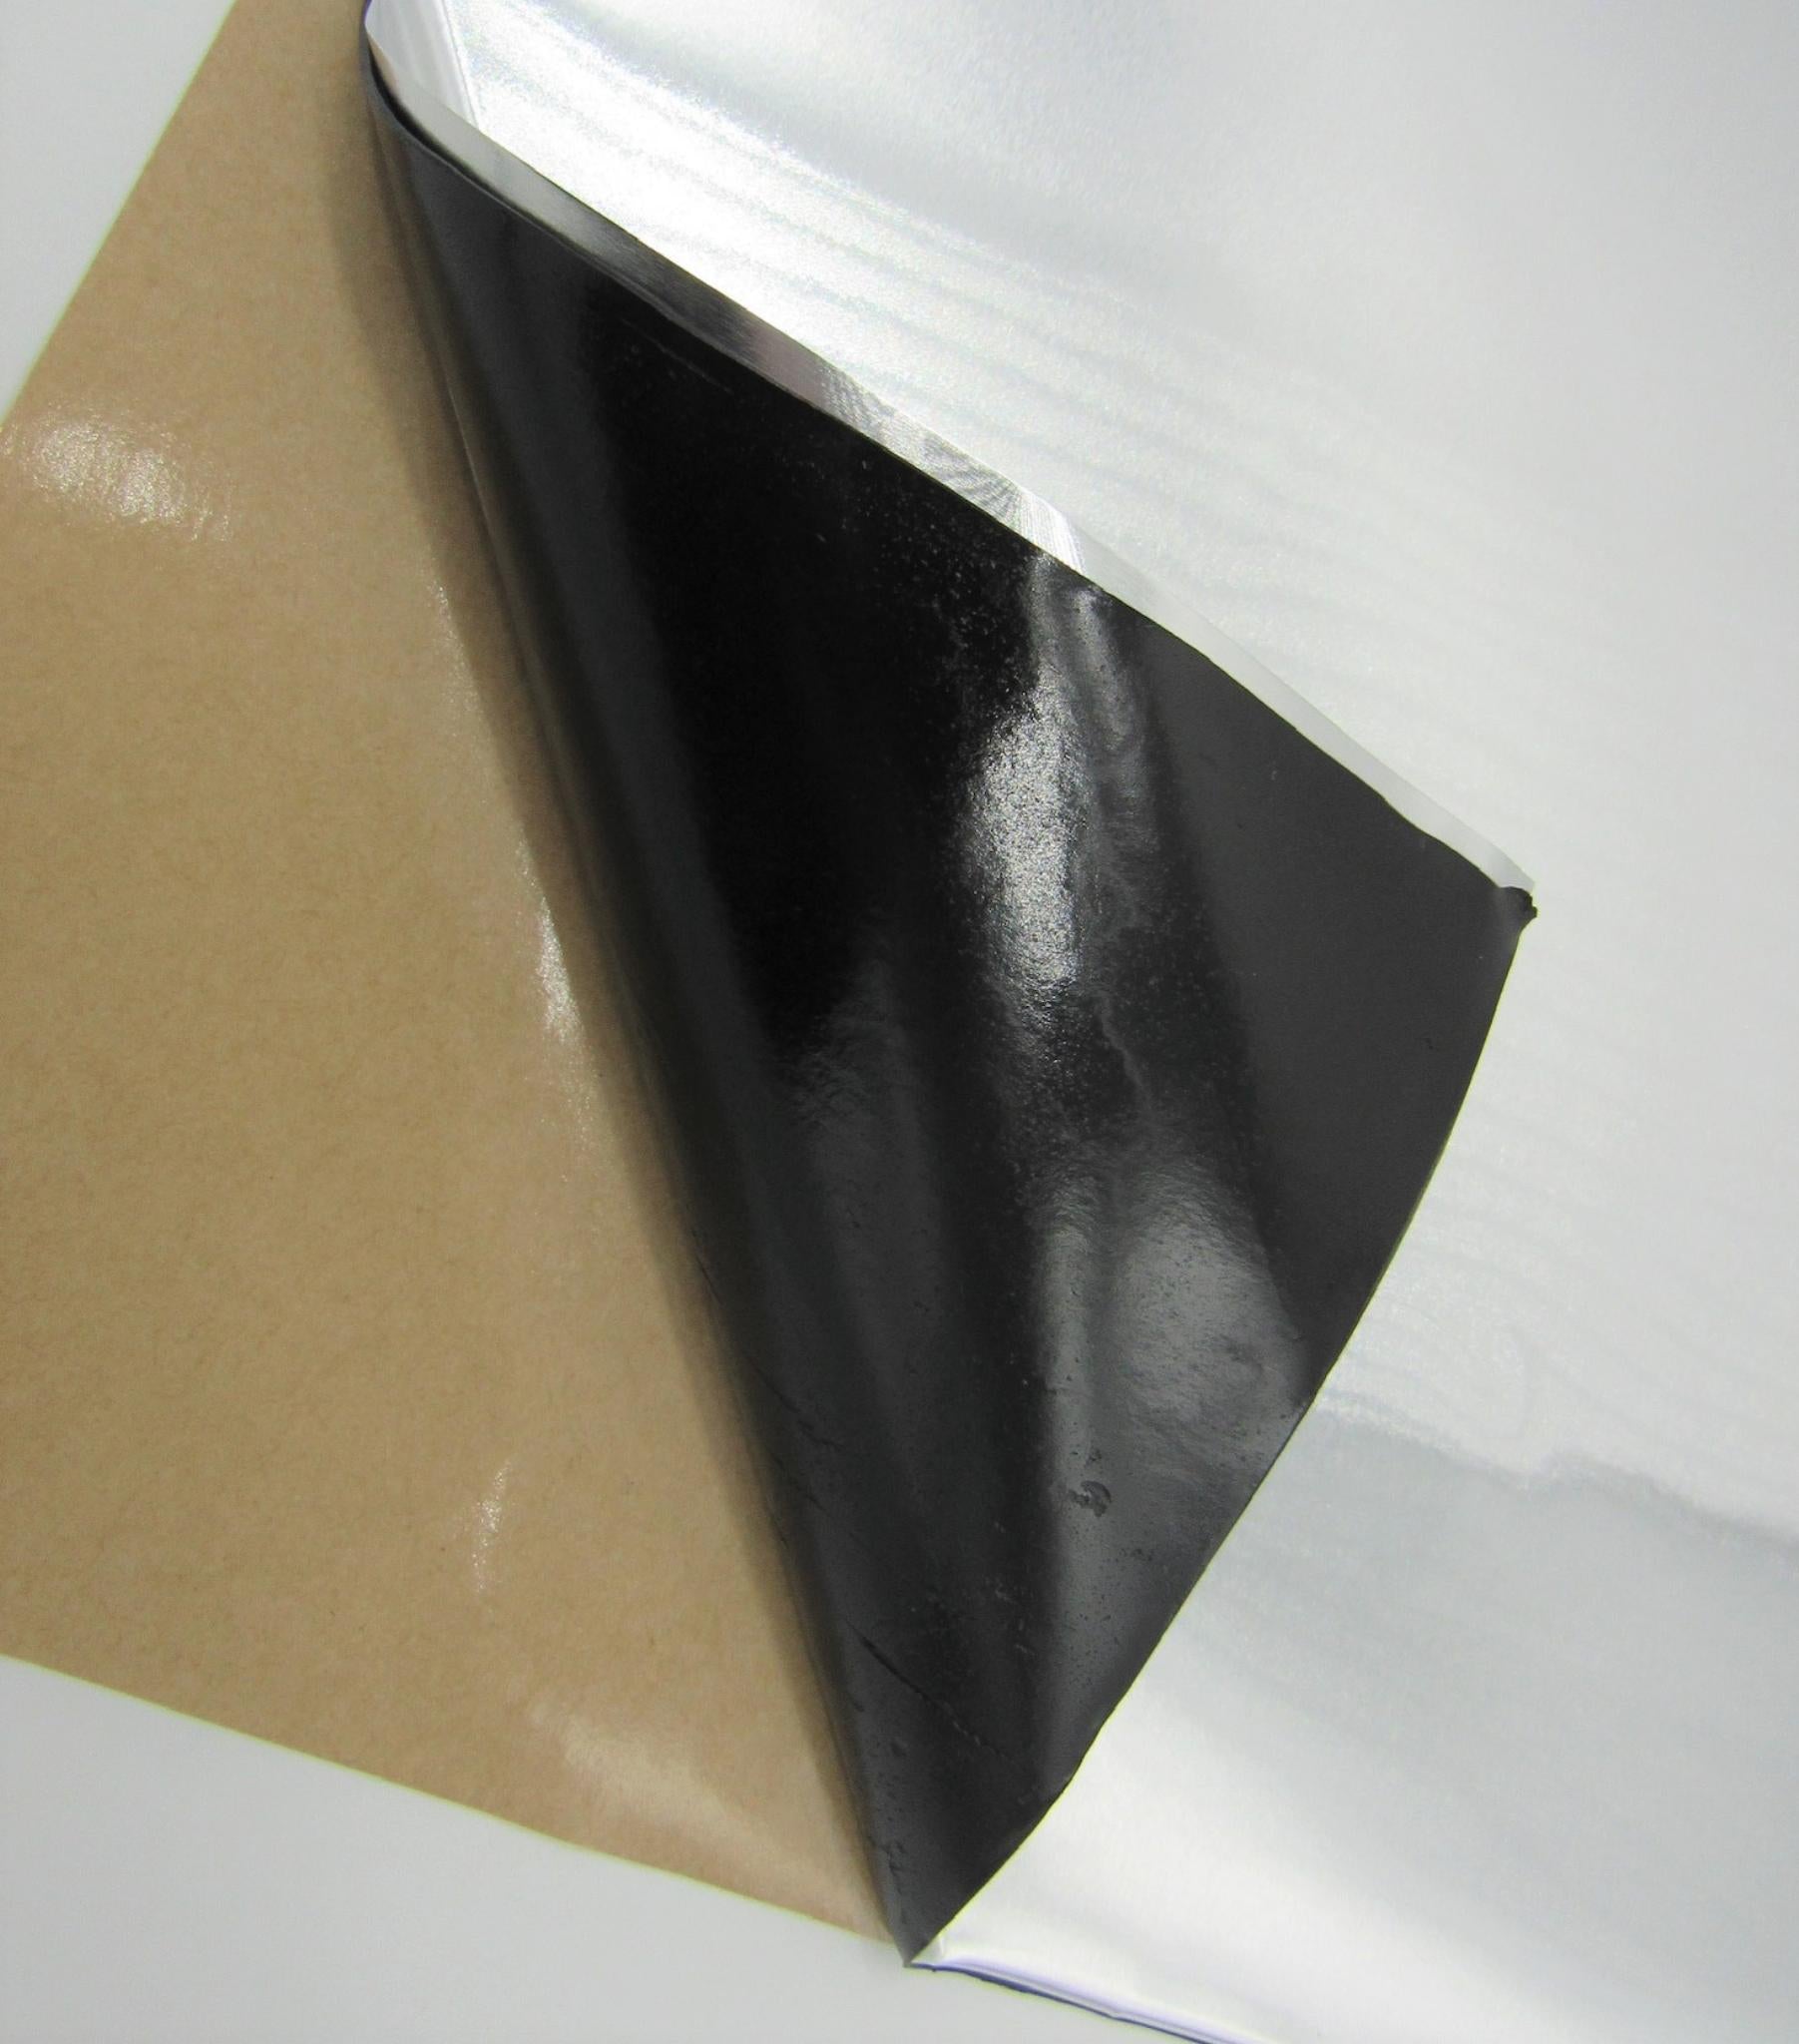 Carbon Fiber Black Adhesive Vinyl 12in x 12in Sheets